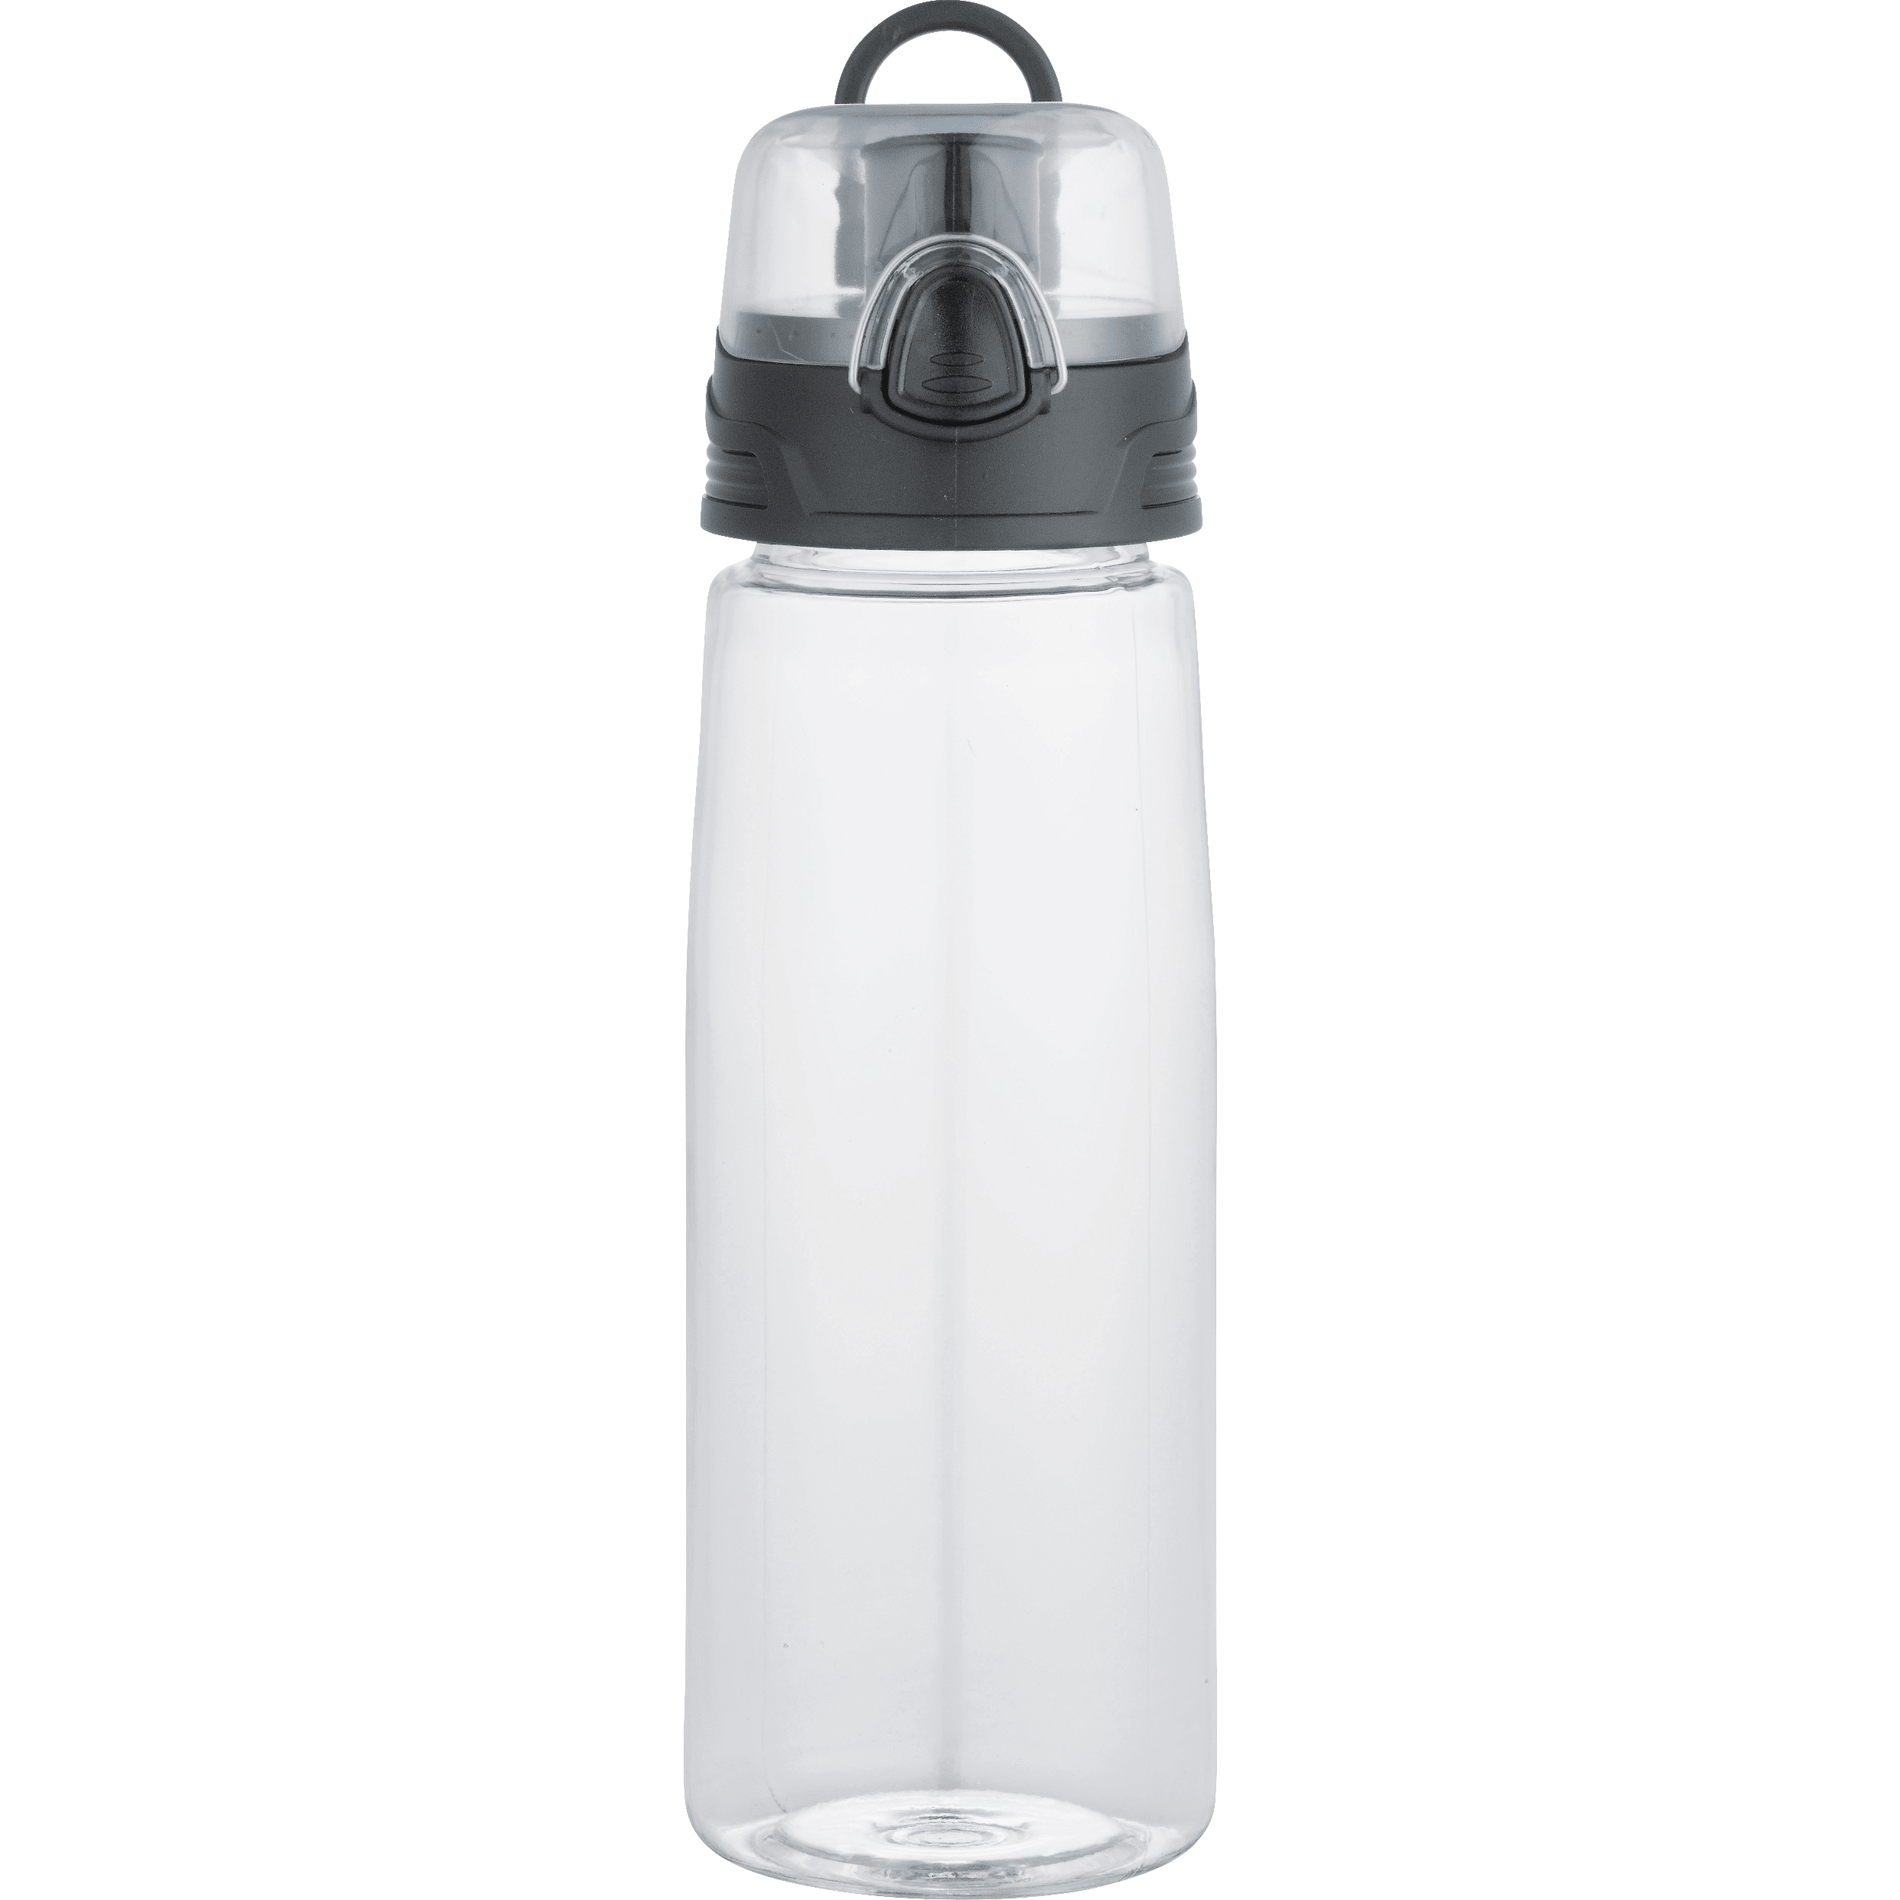 Bullet SM-6673 - Capri 25oz Tritan Sports Bottle $7.19 - Drinkware